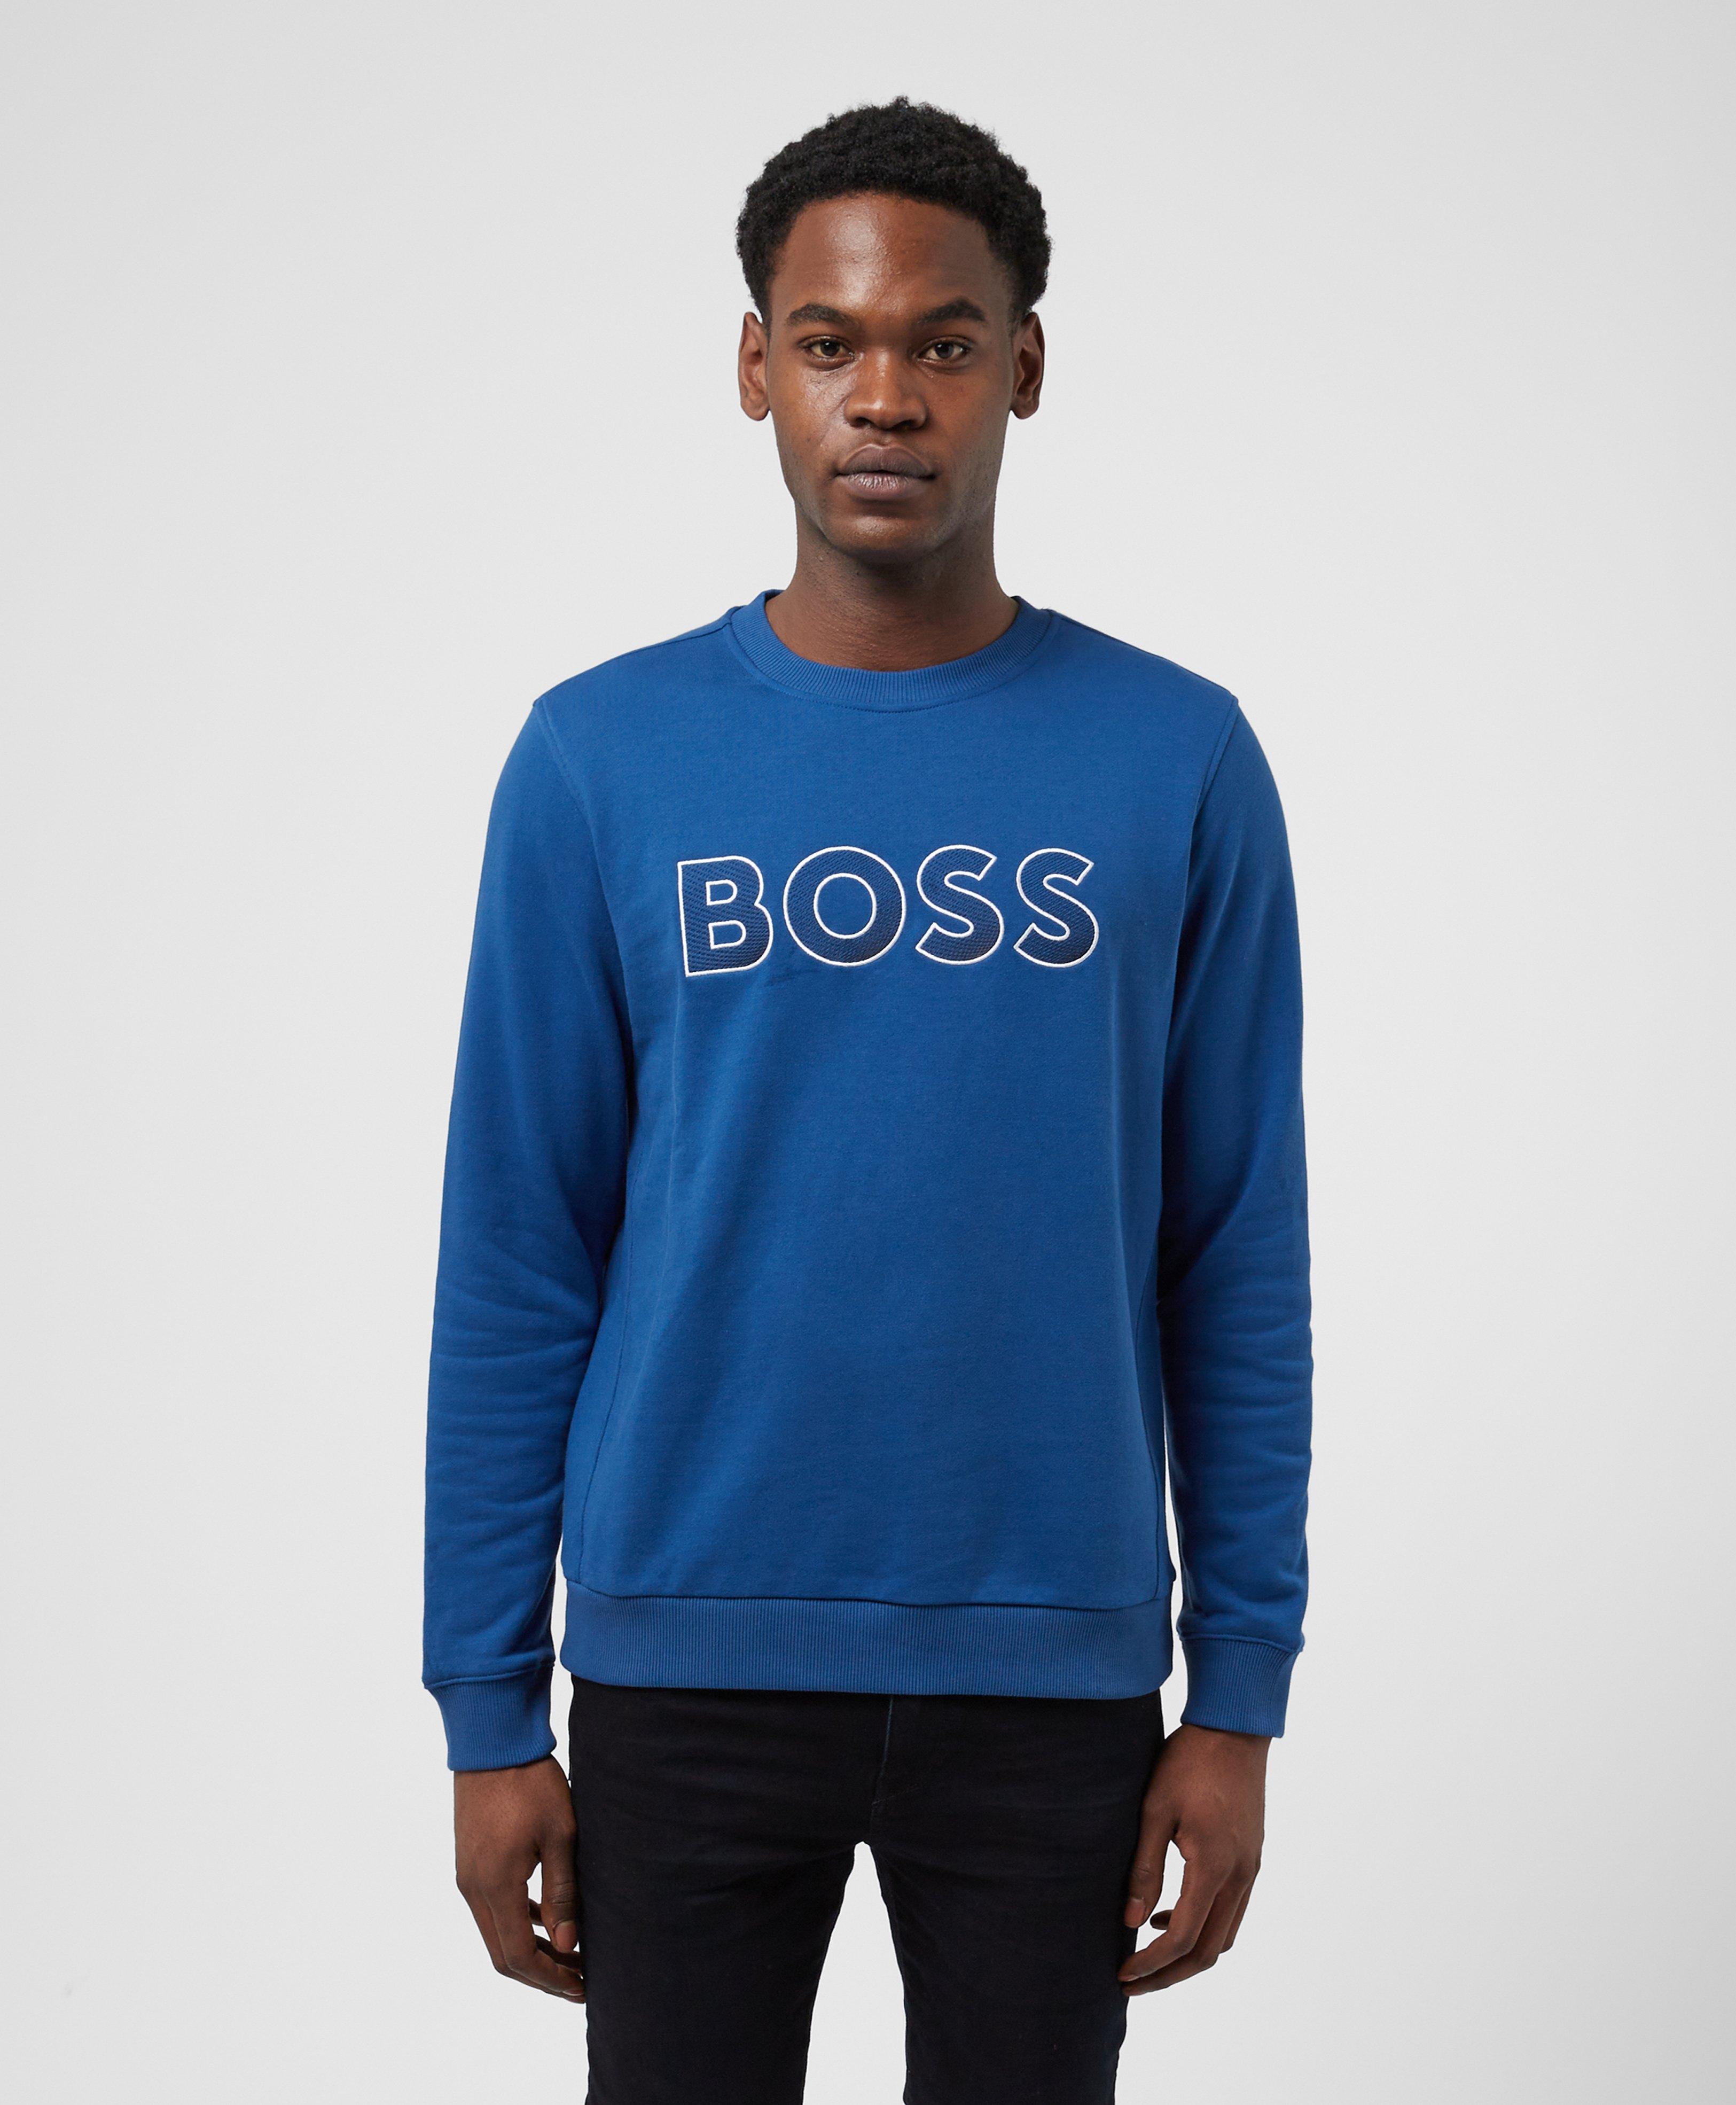 BOSS by HUGO BOSS Salbo Essential Sweatshirt in Blue for Men | Lyst